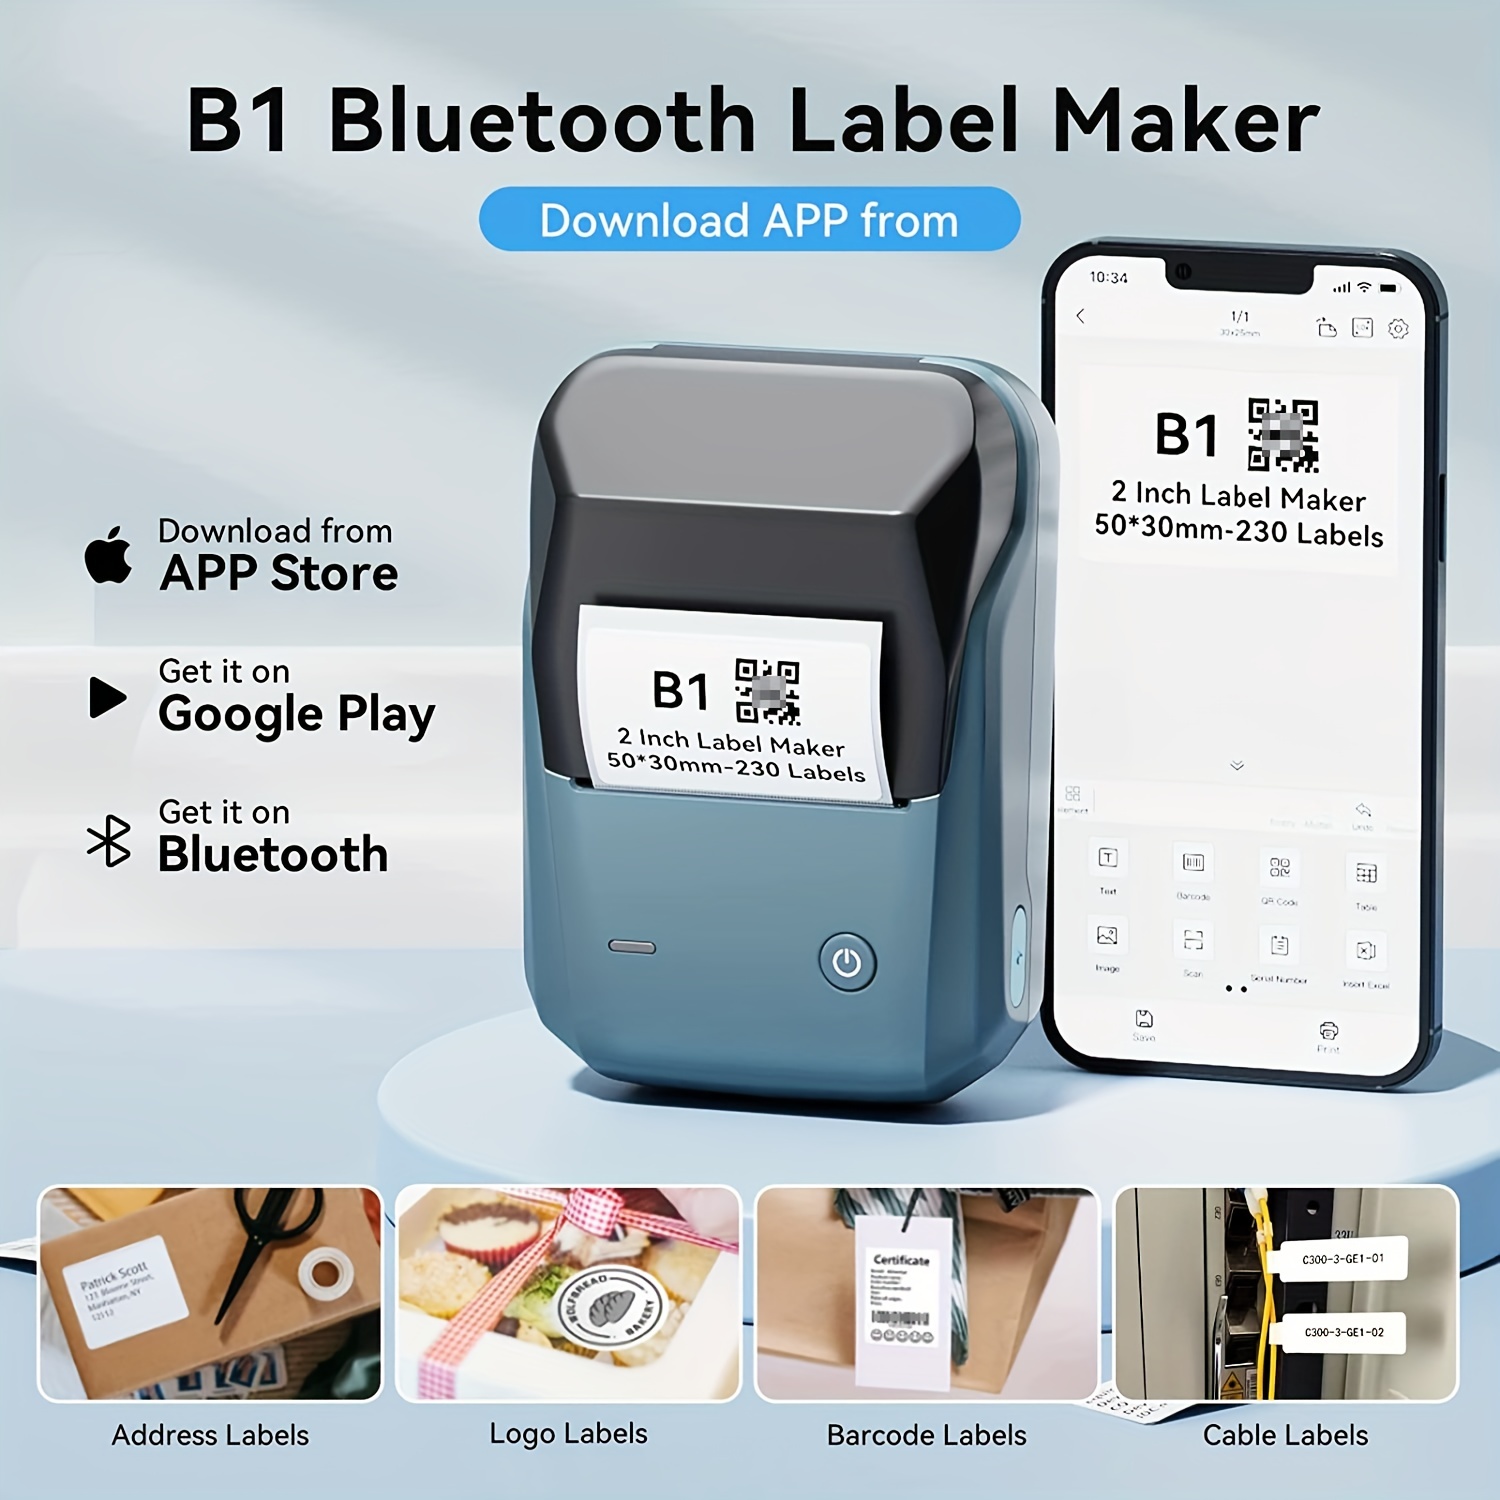 Niimbot B1 Thermal Label Printer Clothing Jewelry Product Price Barcode  Sticker Mobile Bluetooth Mini Portable Printer Maker